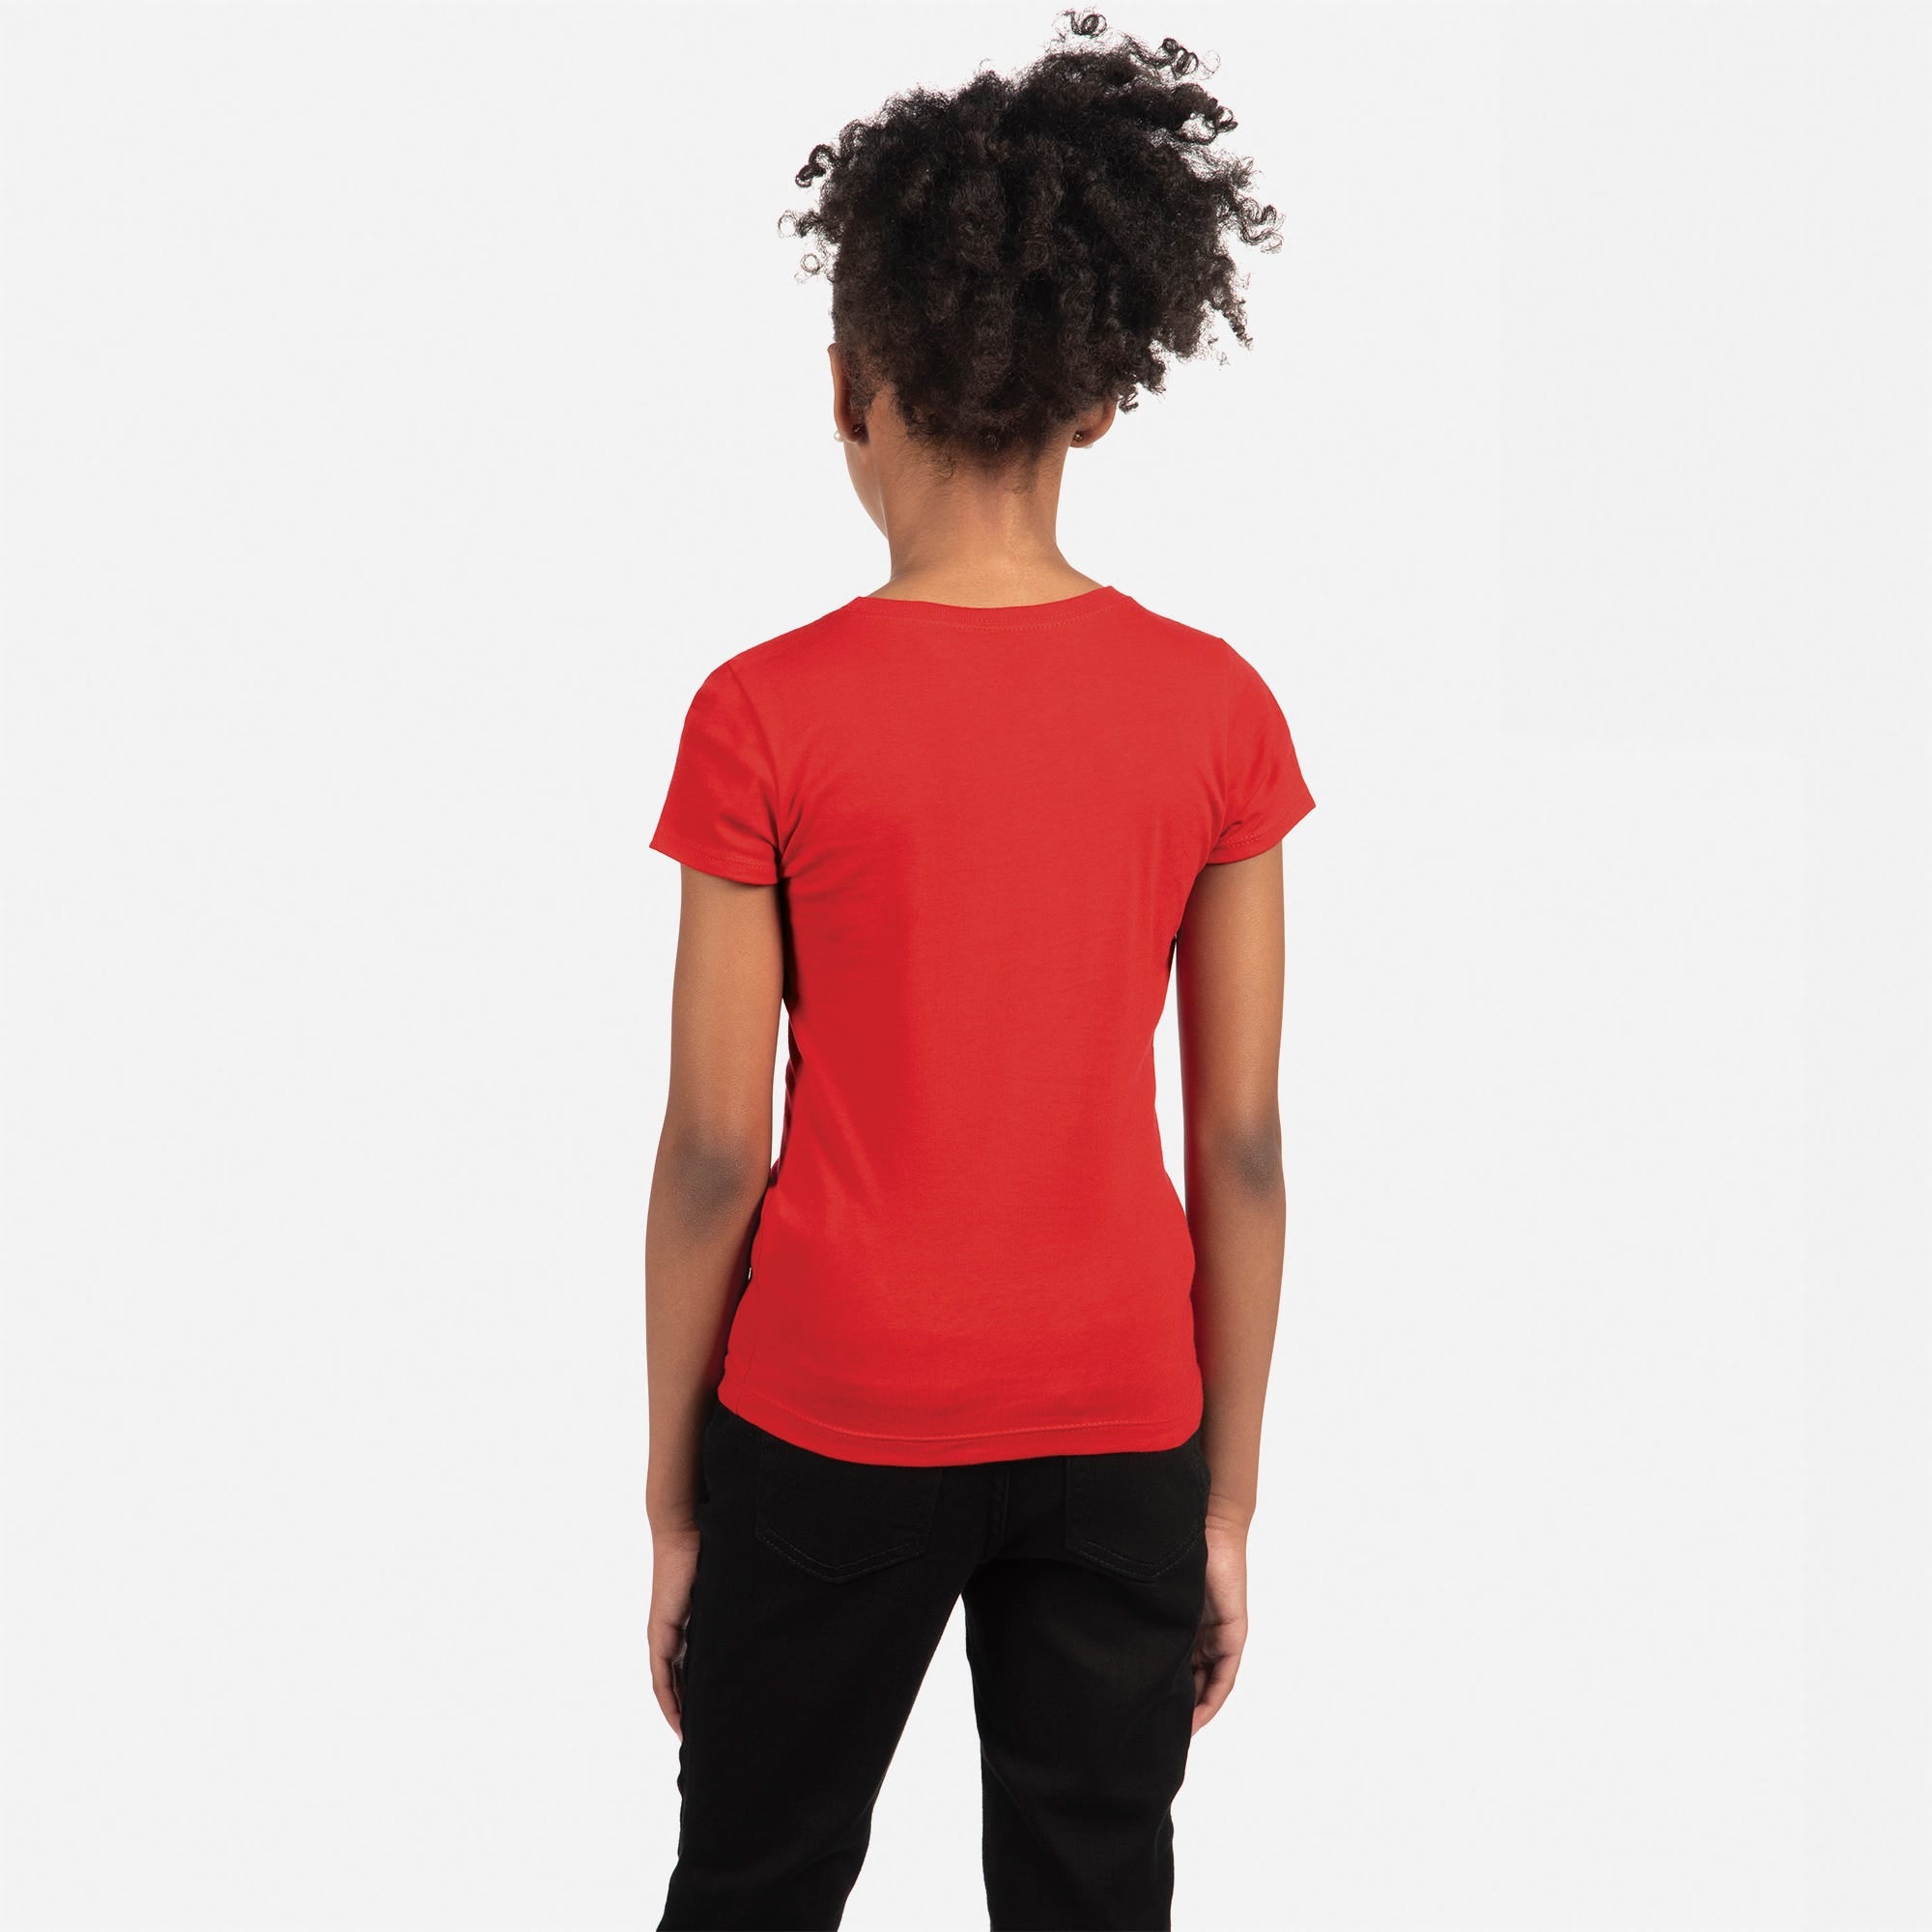 Cotton Princess T-Shirt Red 3710 Next Level Apparel Back View